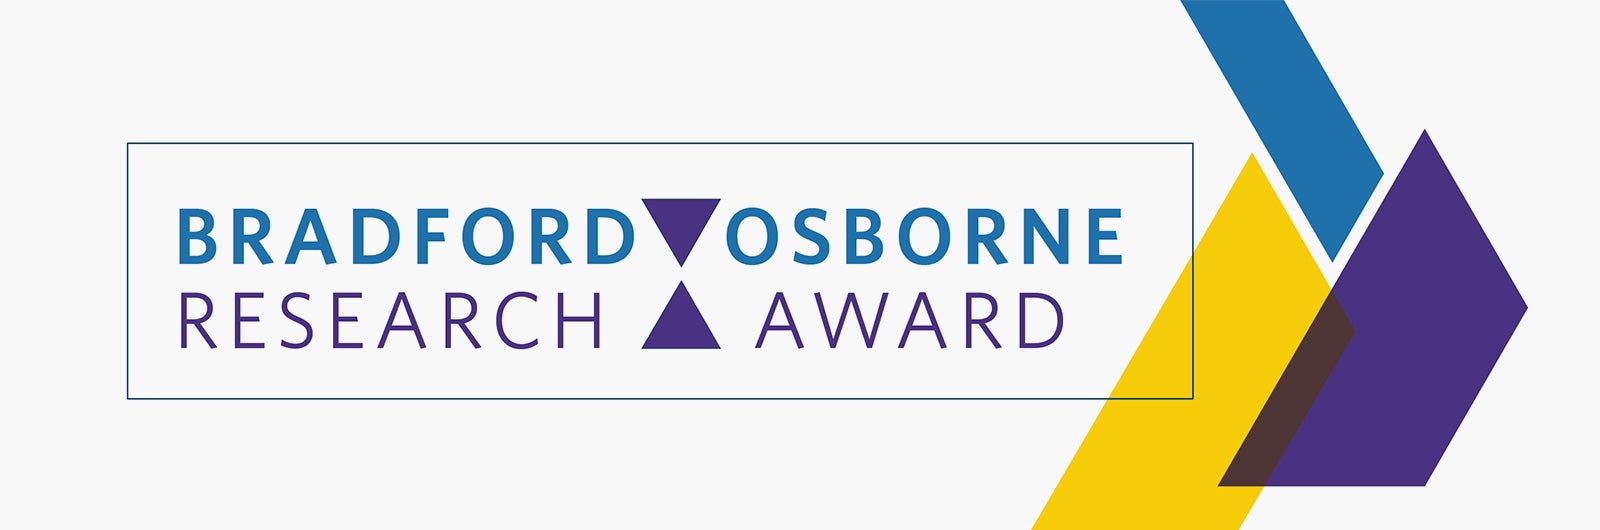 Bradford-Osborne Award Recognizes Scholarship to Advance Small Business